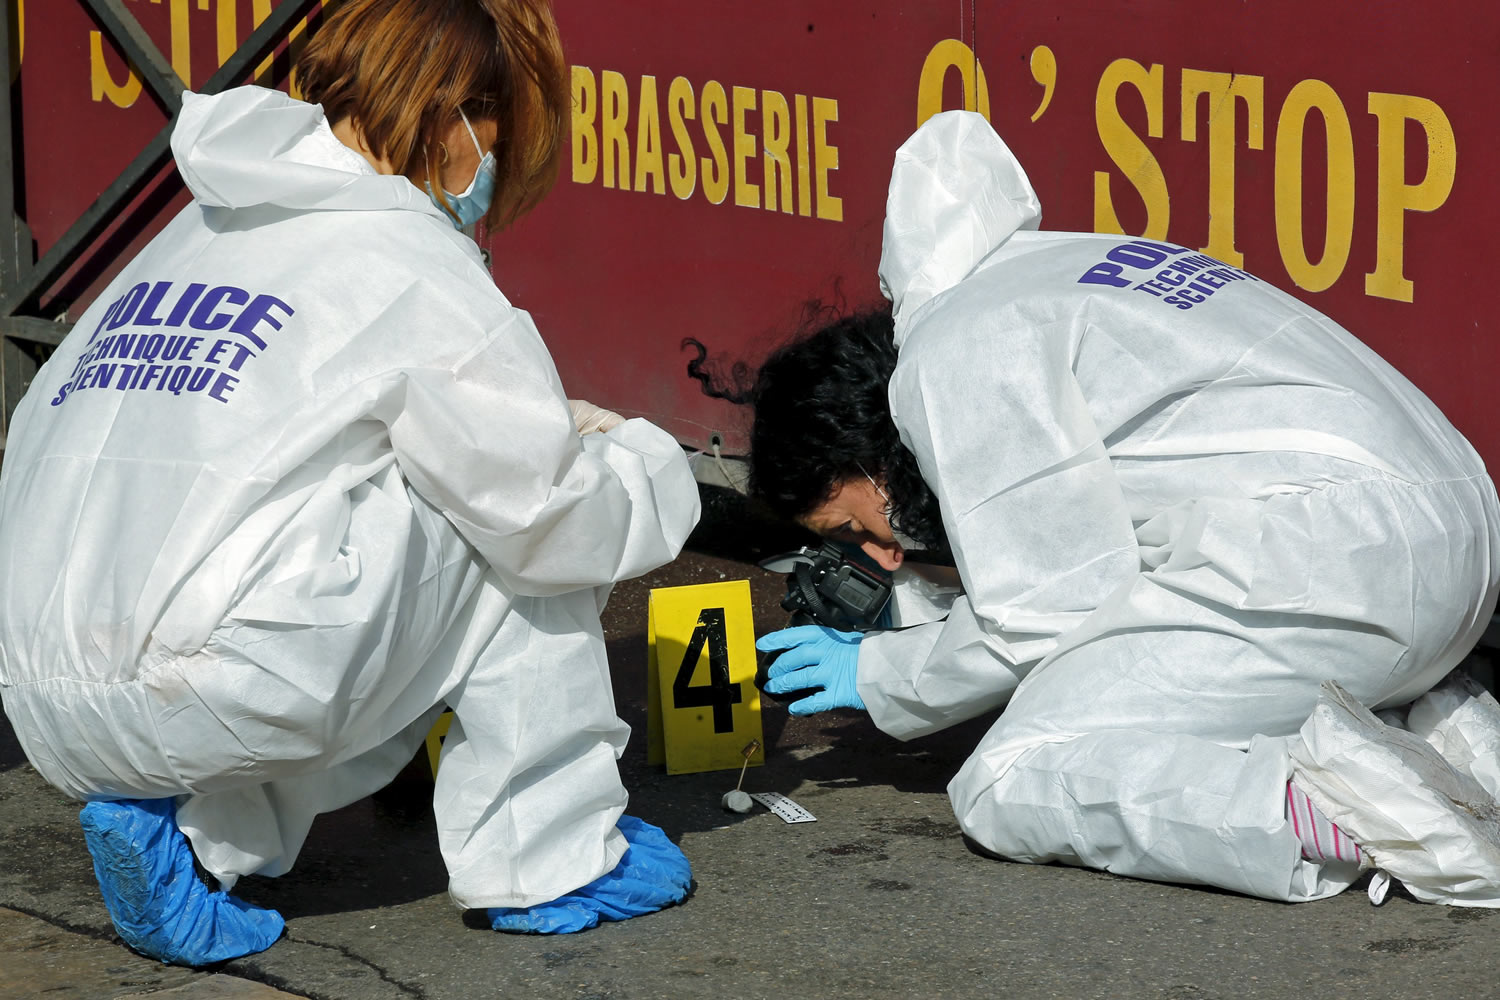 Un grupo armado con fusiles de gran calibre tirotea un bar de Marsella: un muerto y cinco heridos